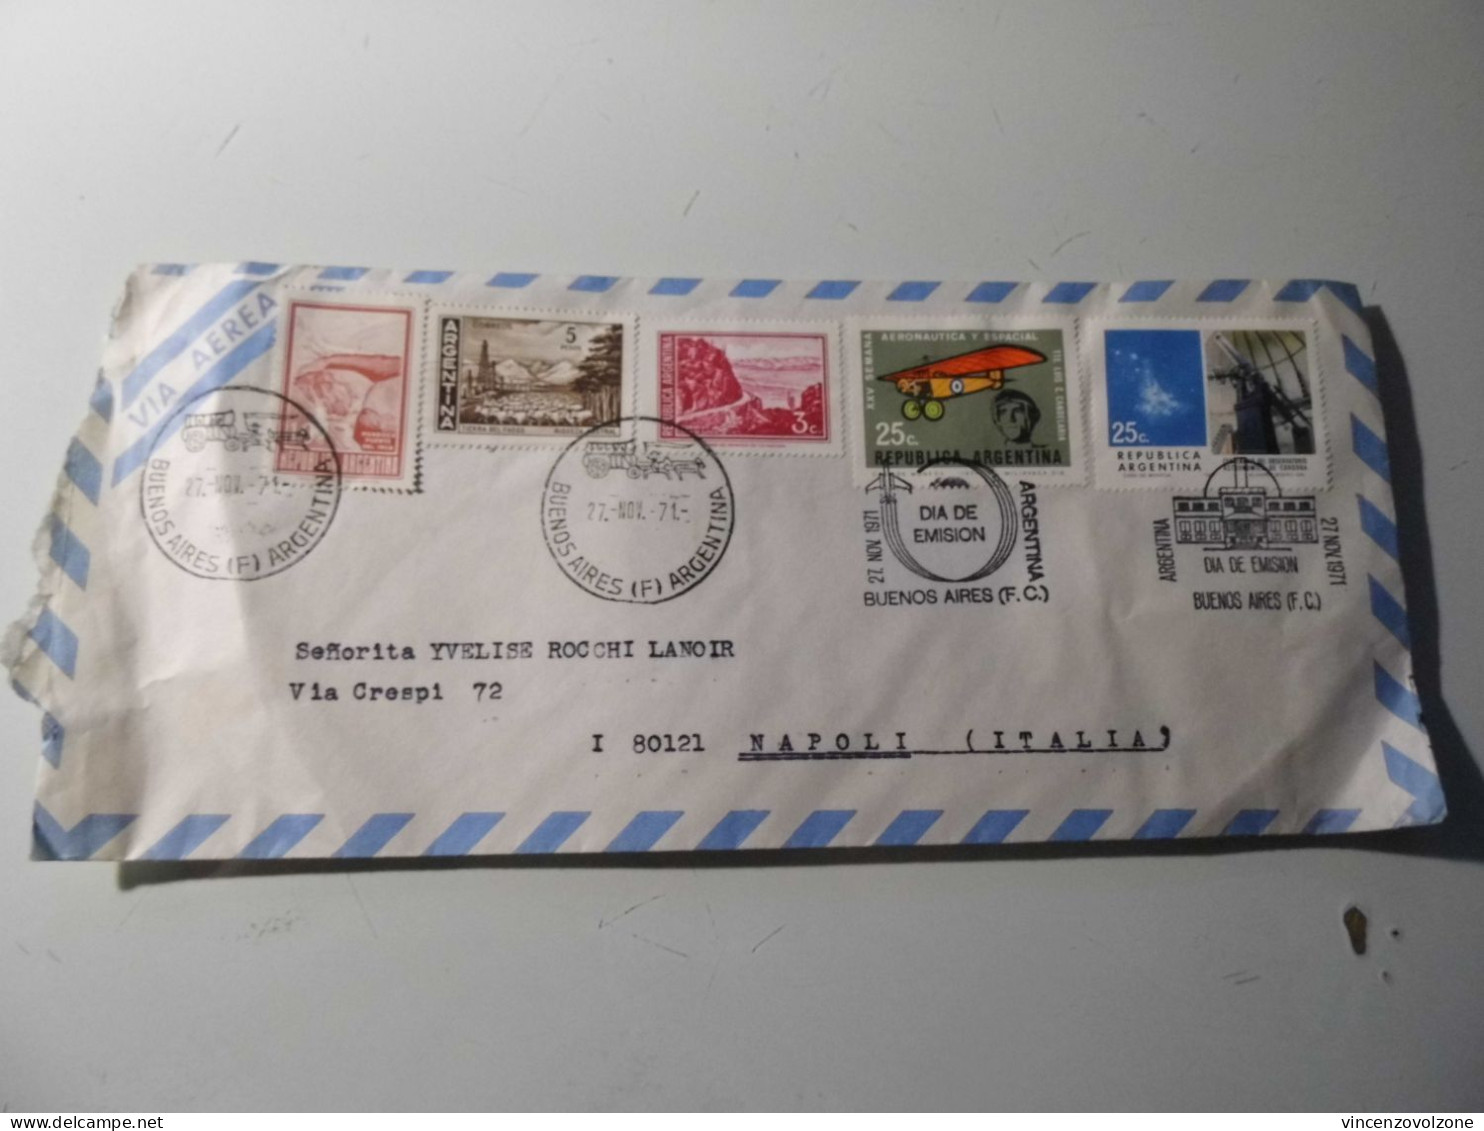 Busta Viaggiata Posta Aerea Per L'italia "DIA DE EMISION XXV SEMANA AERONAUTICA Y ESPACIAL" 1971 - Storia Postale